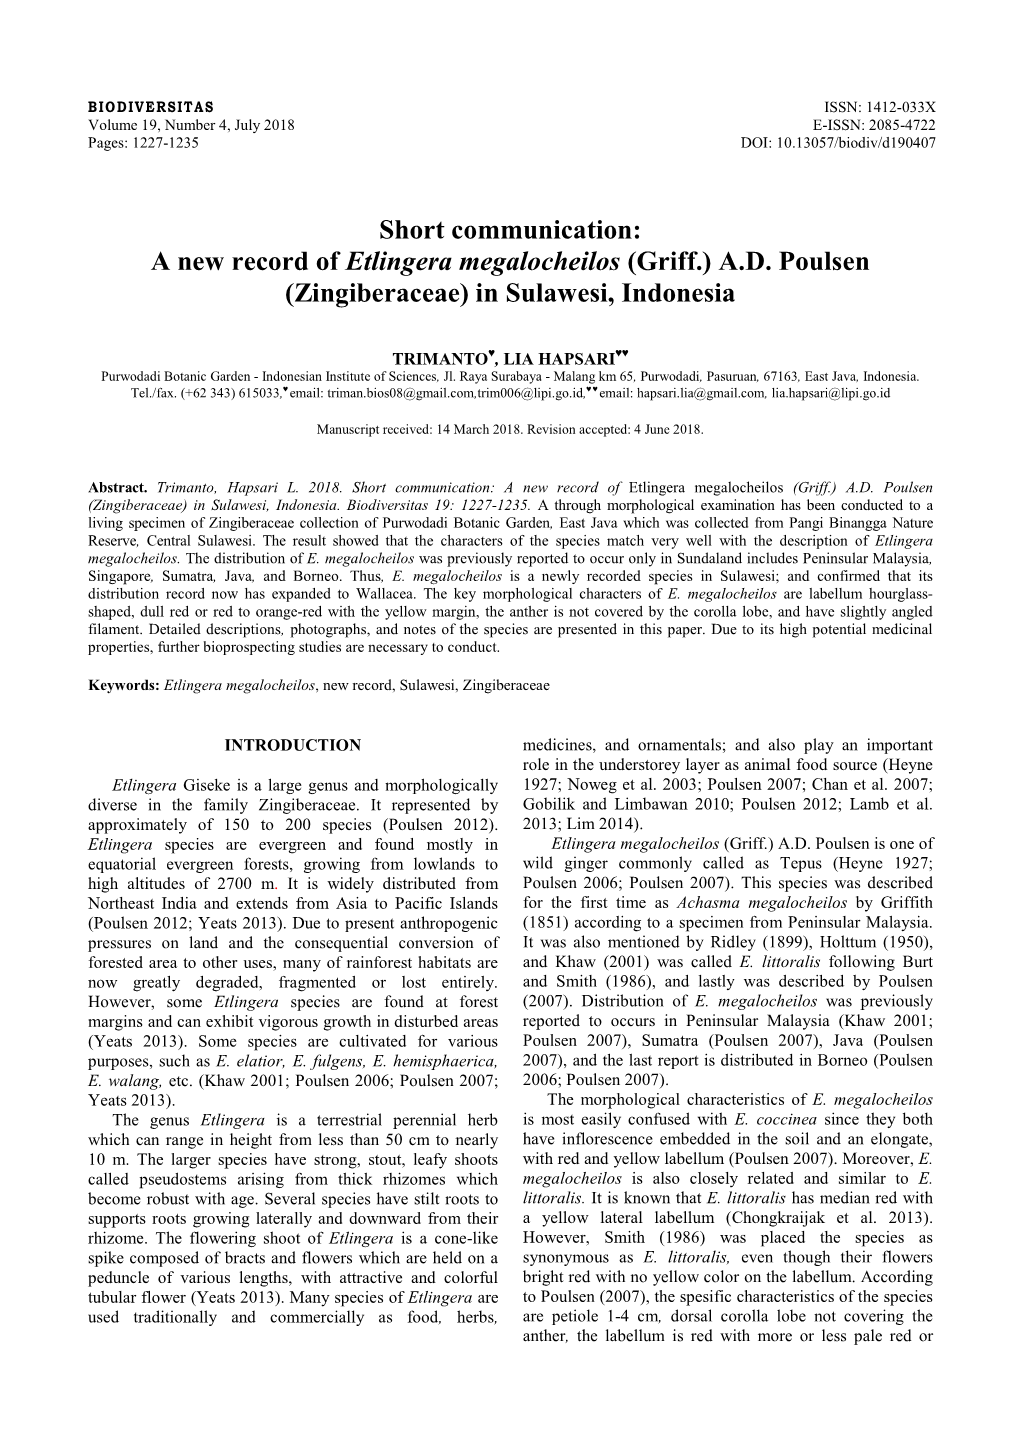 Short Communication: a New Record of Etlingera Megalocheilos (Griff.) A.D. Poulsen (Zingiberaceae) in Sulawesi, Indonesia